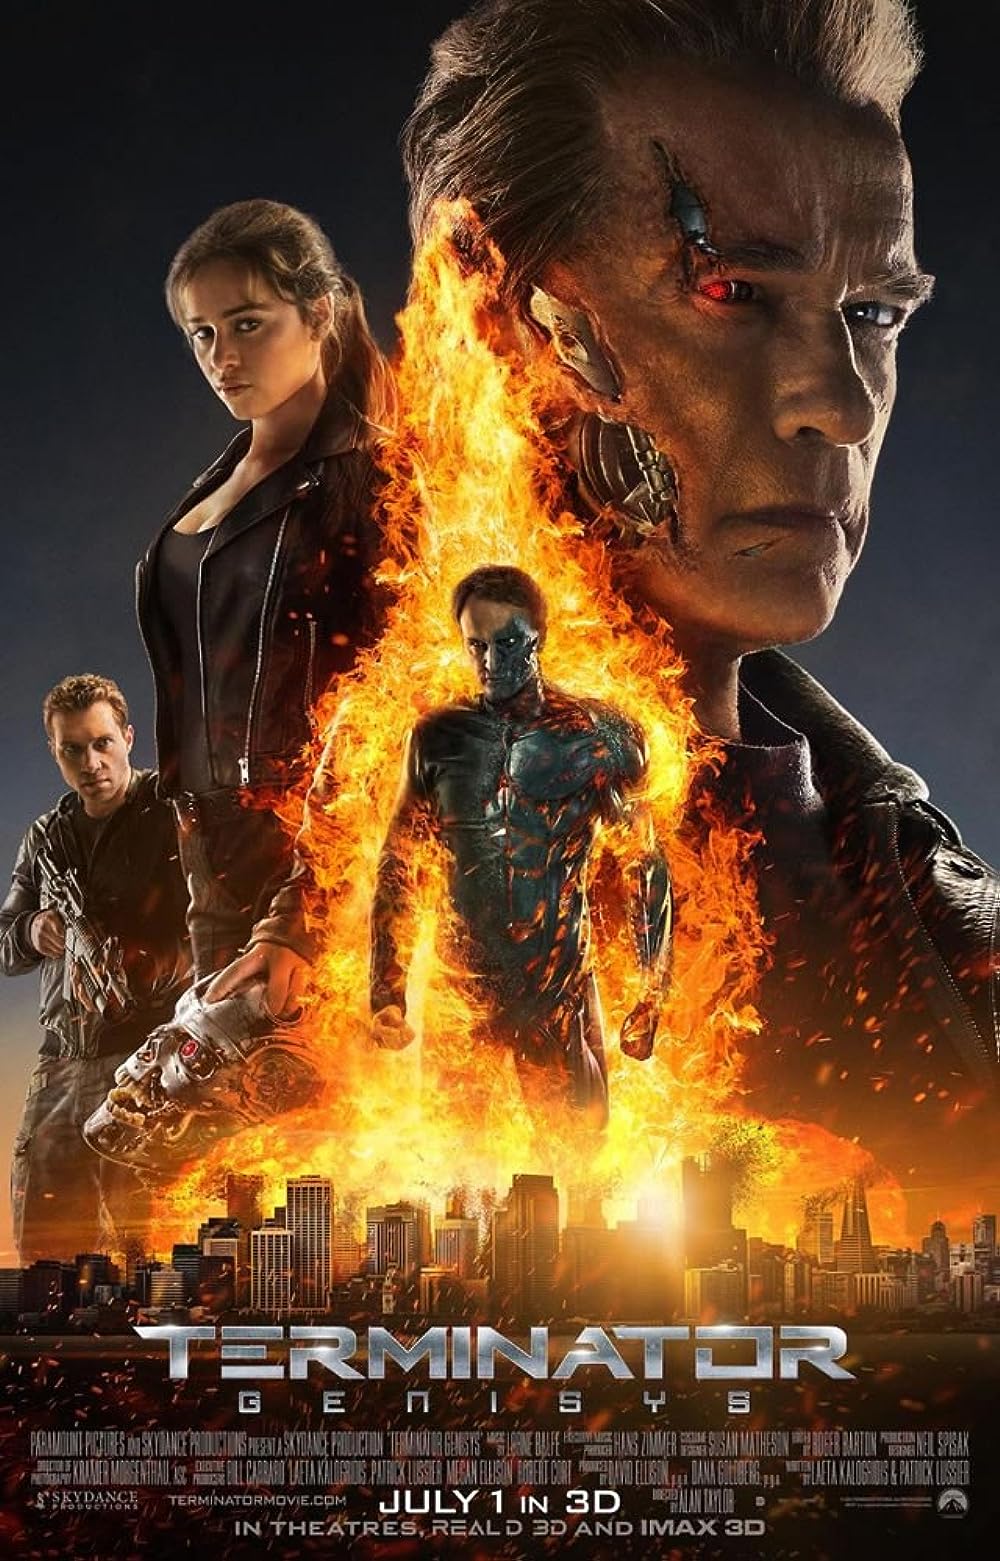 FULL MOVIE: Terminator 5: Genisys (2015)